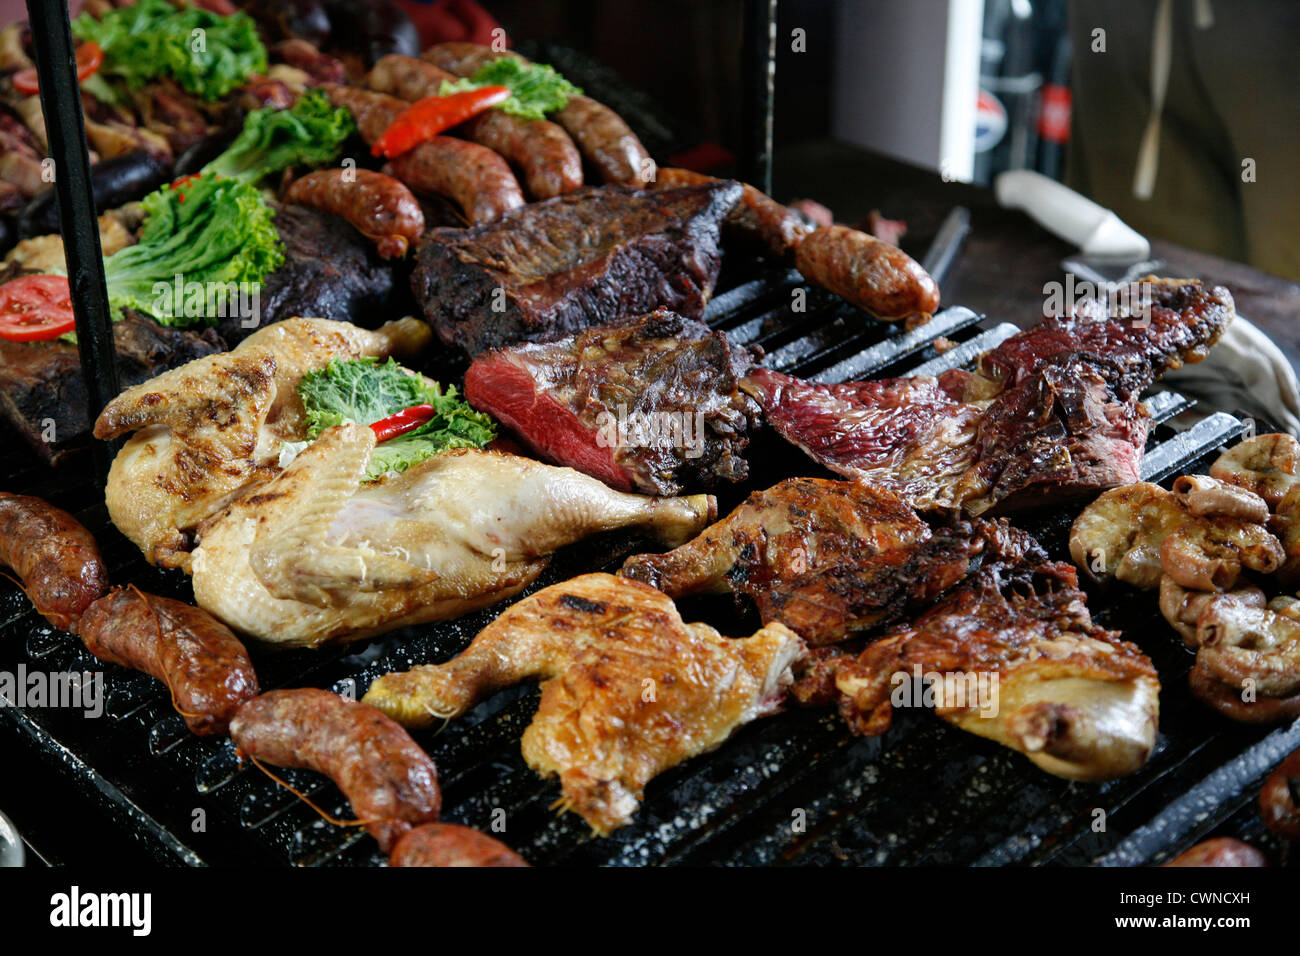 Parrilla Argentina barbecue Stock Photo by ©rocharibeiro 98816048